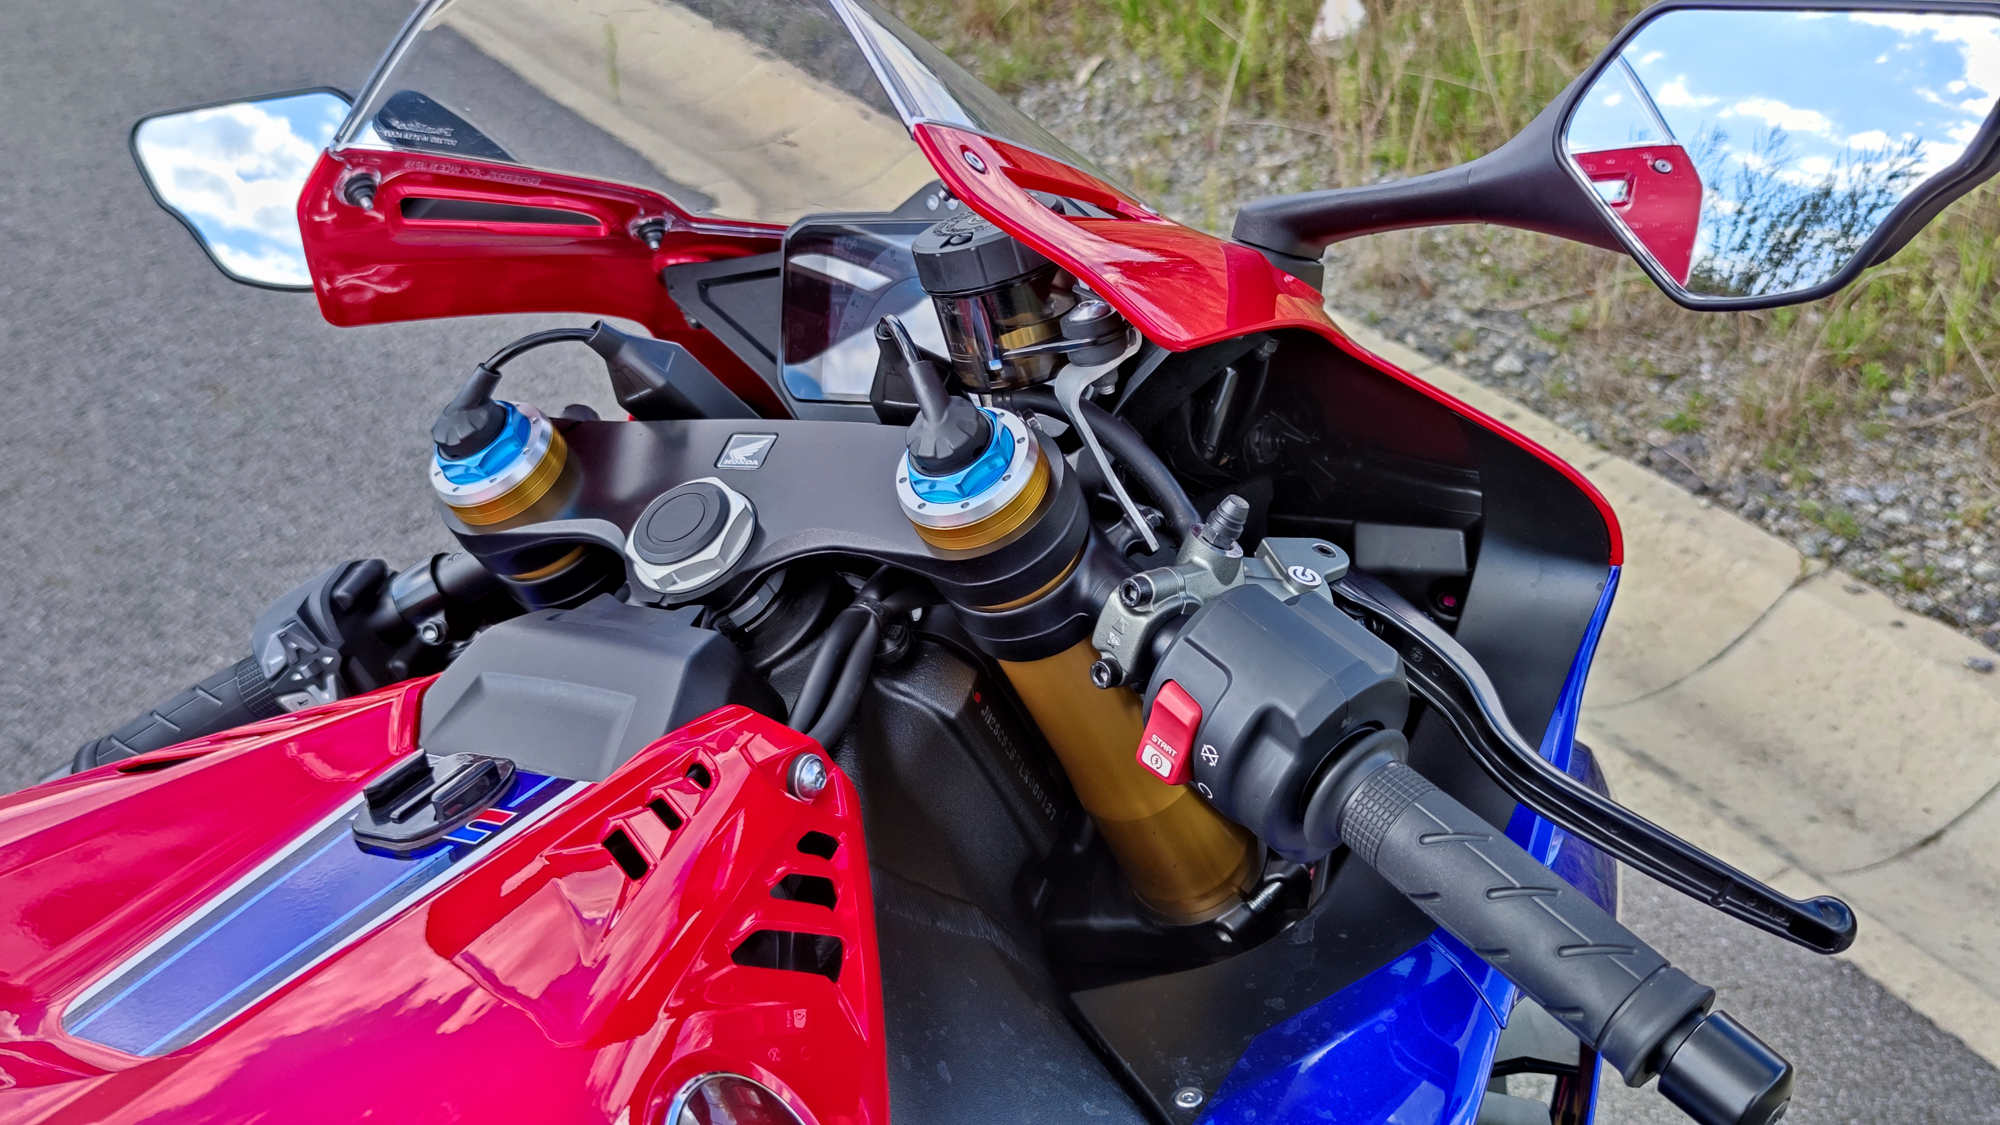 Honda Fireblade SP CBR1000RRR 2020 bez wysiłku [test